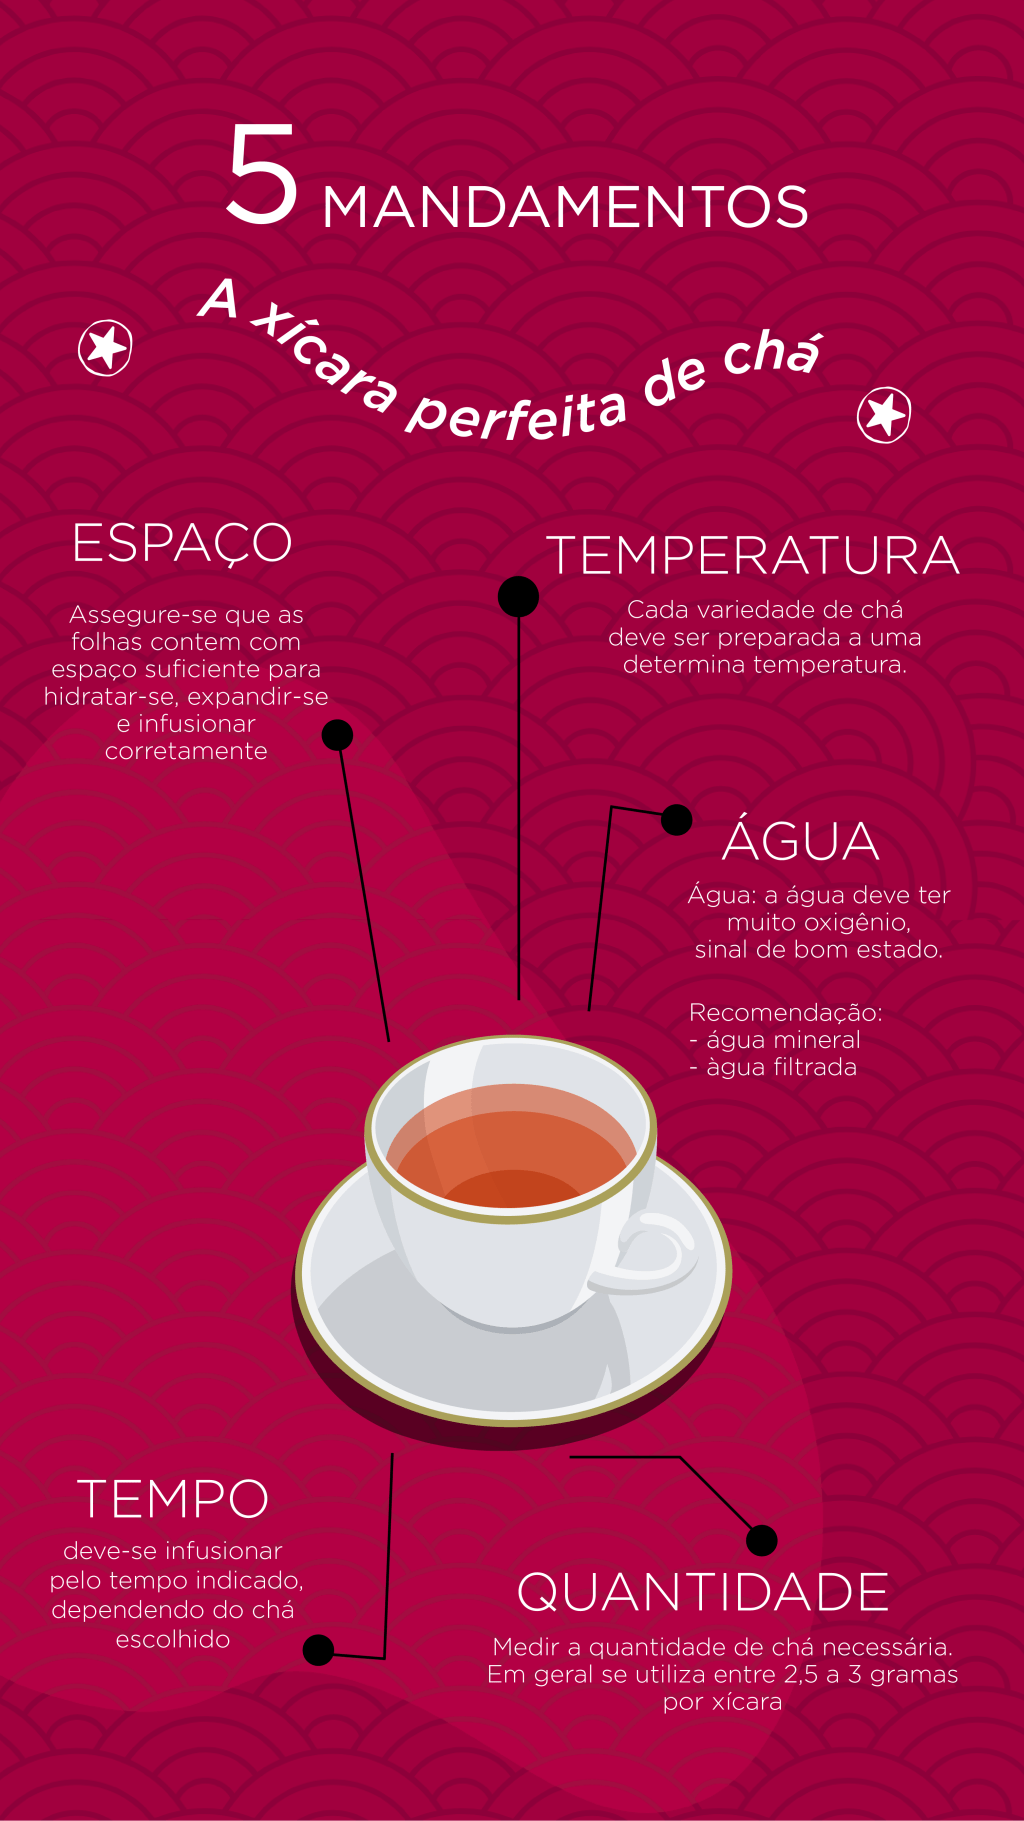 Mandamentos de chá da Camellia sinensis